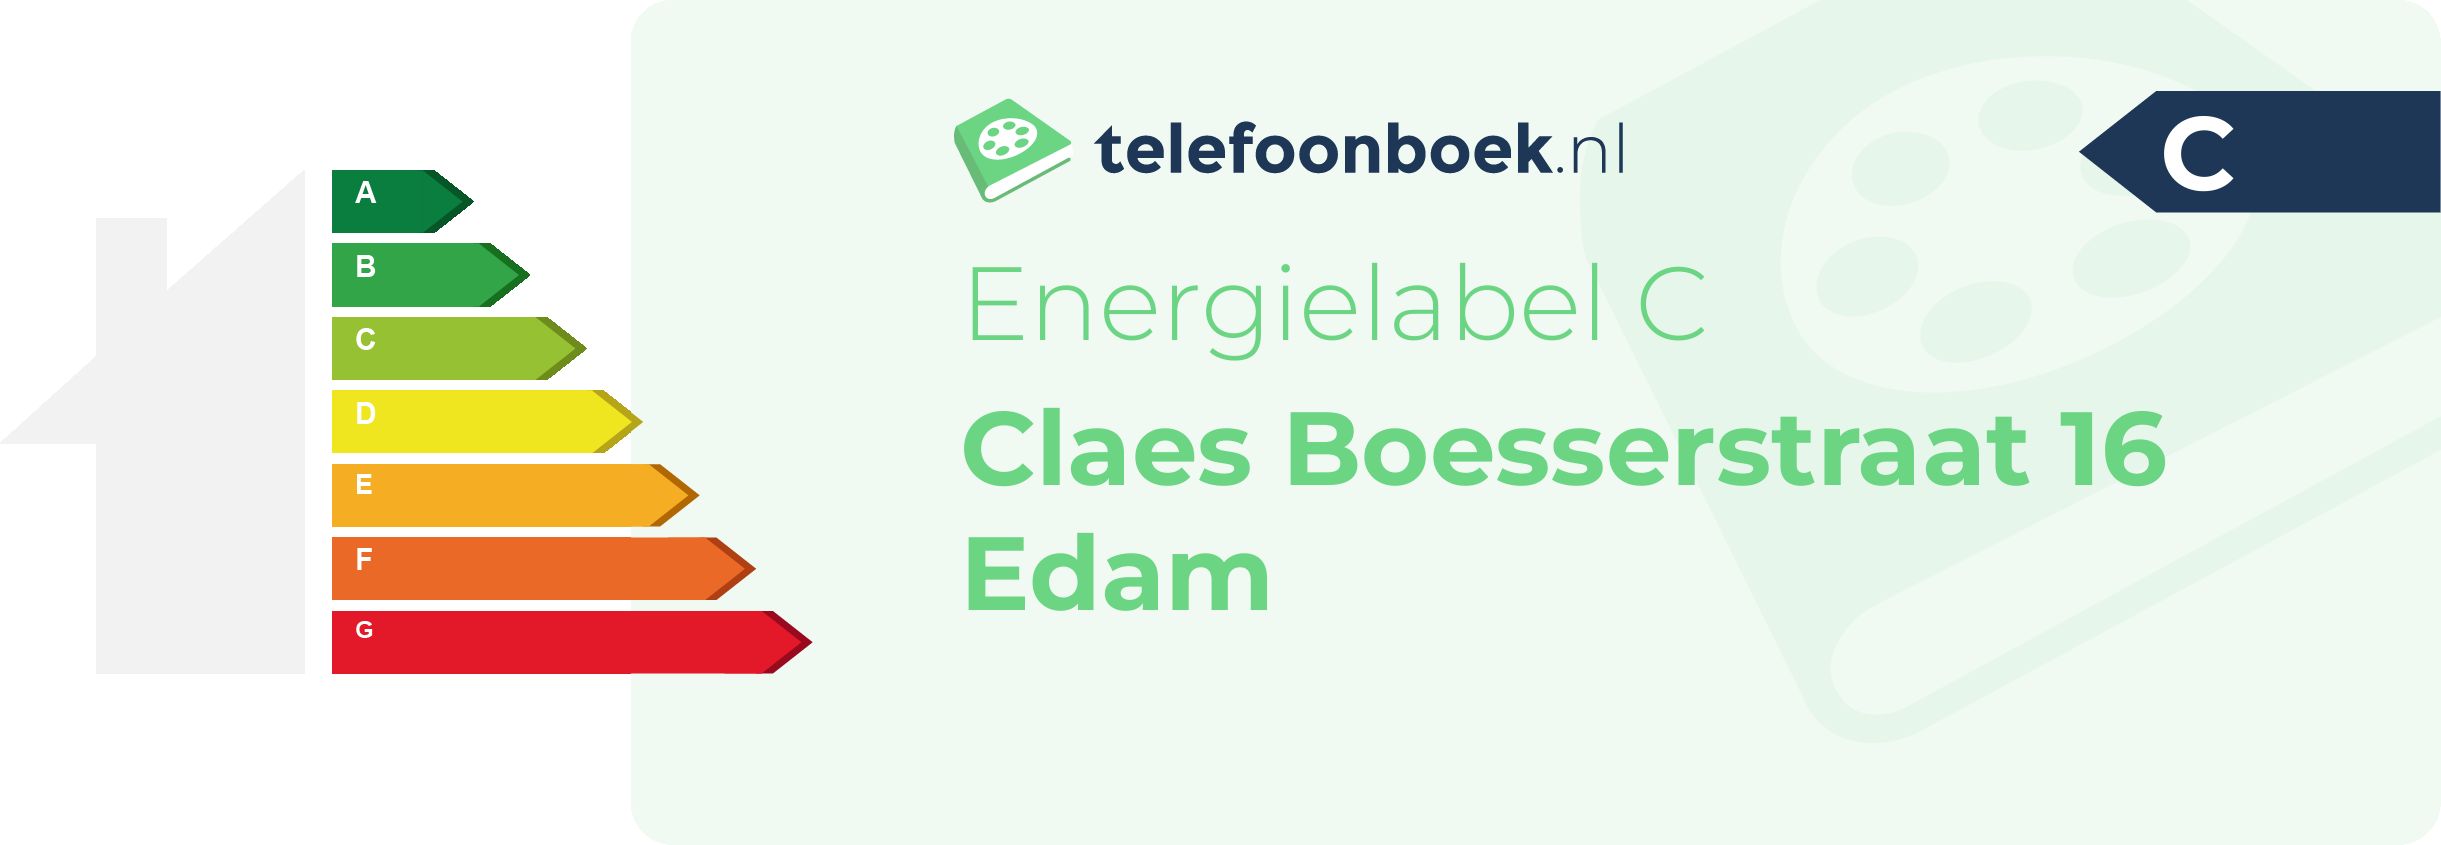 Energielabel Claes Boesserstraat 16 Edam